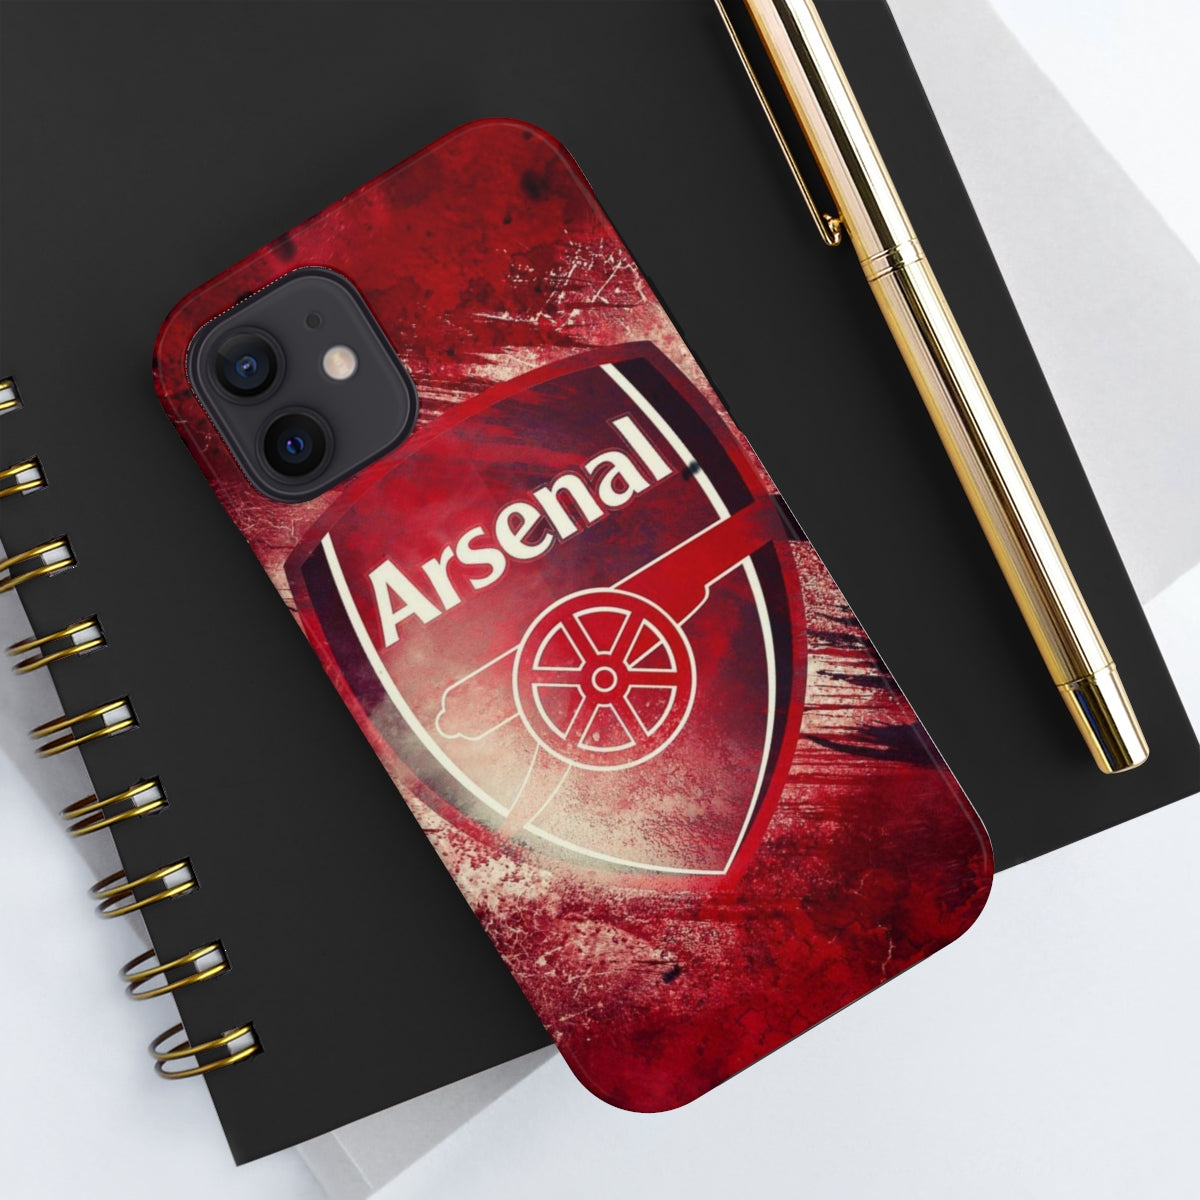 Arsenal Phone Case